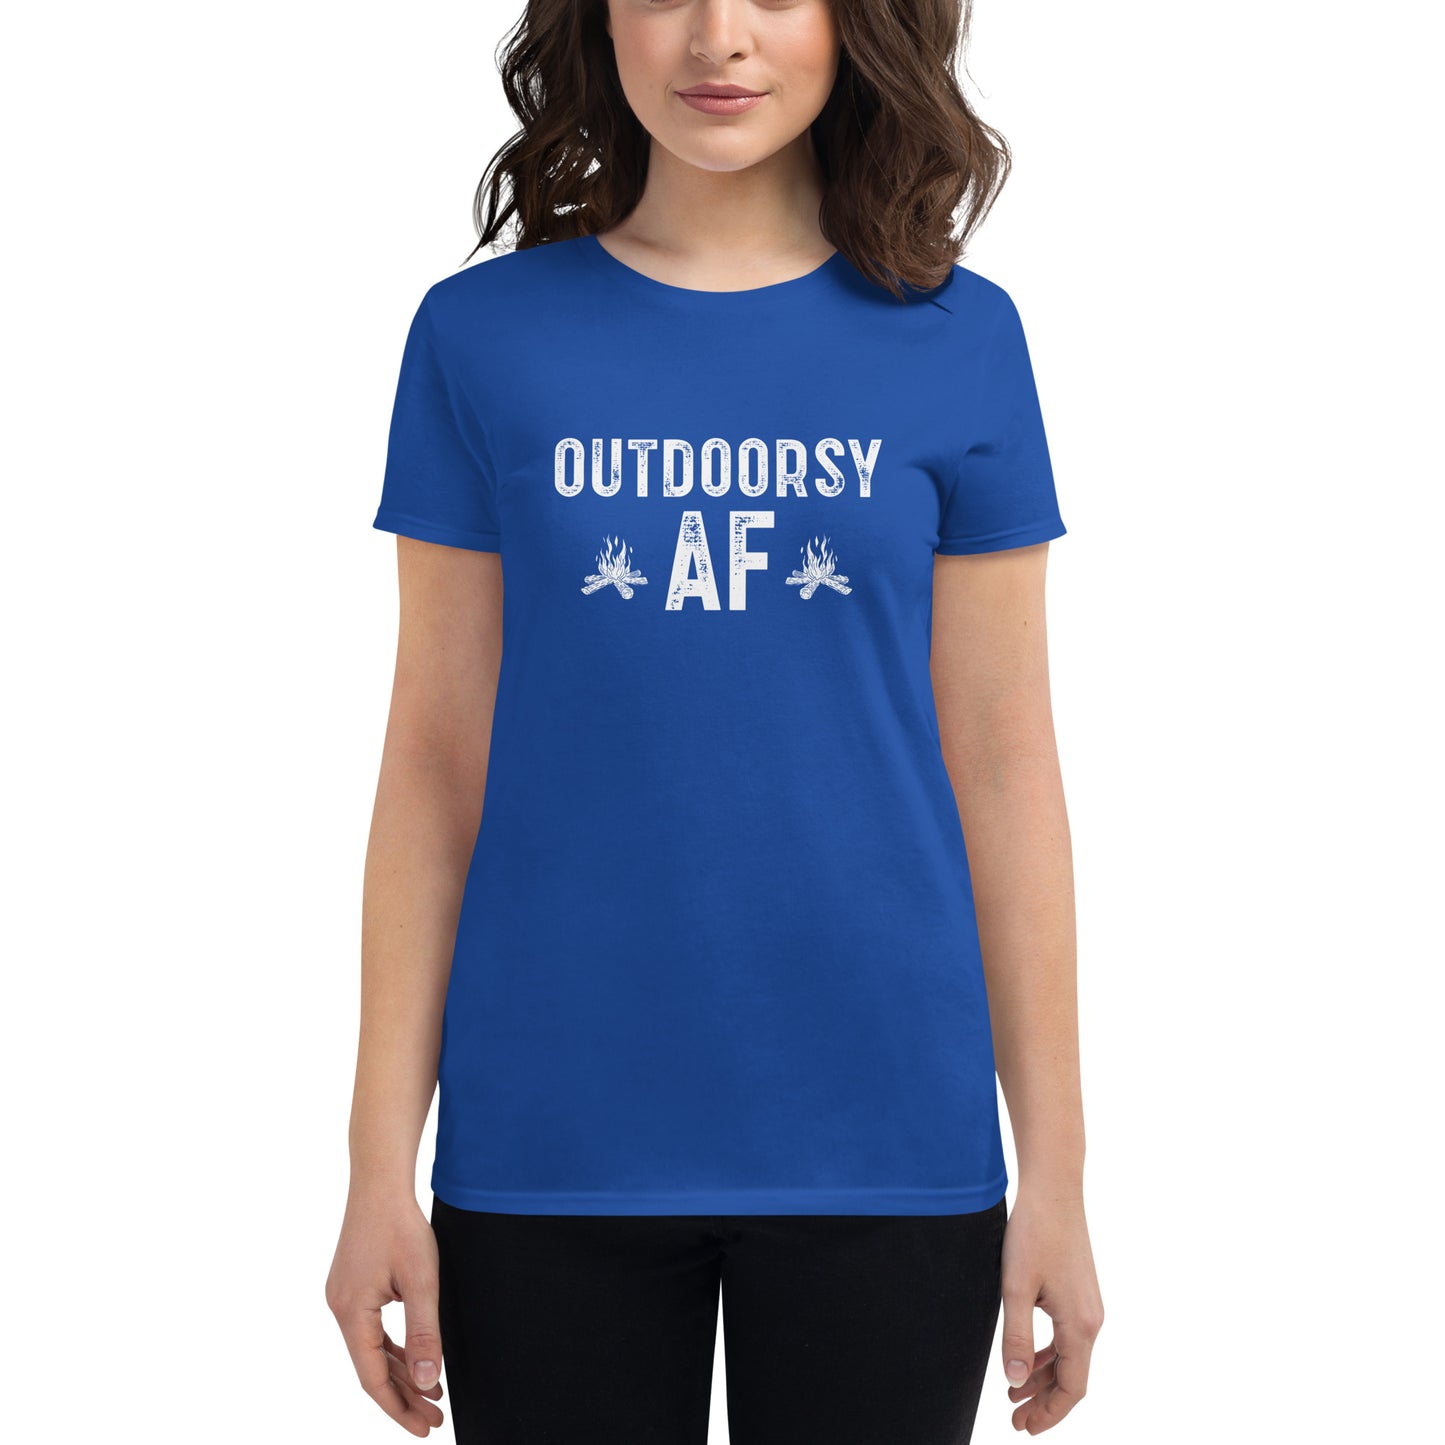 Women's Fashion Fit T-shirt - Outdoorsy AF New Design